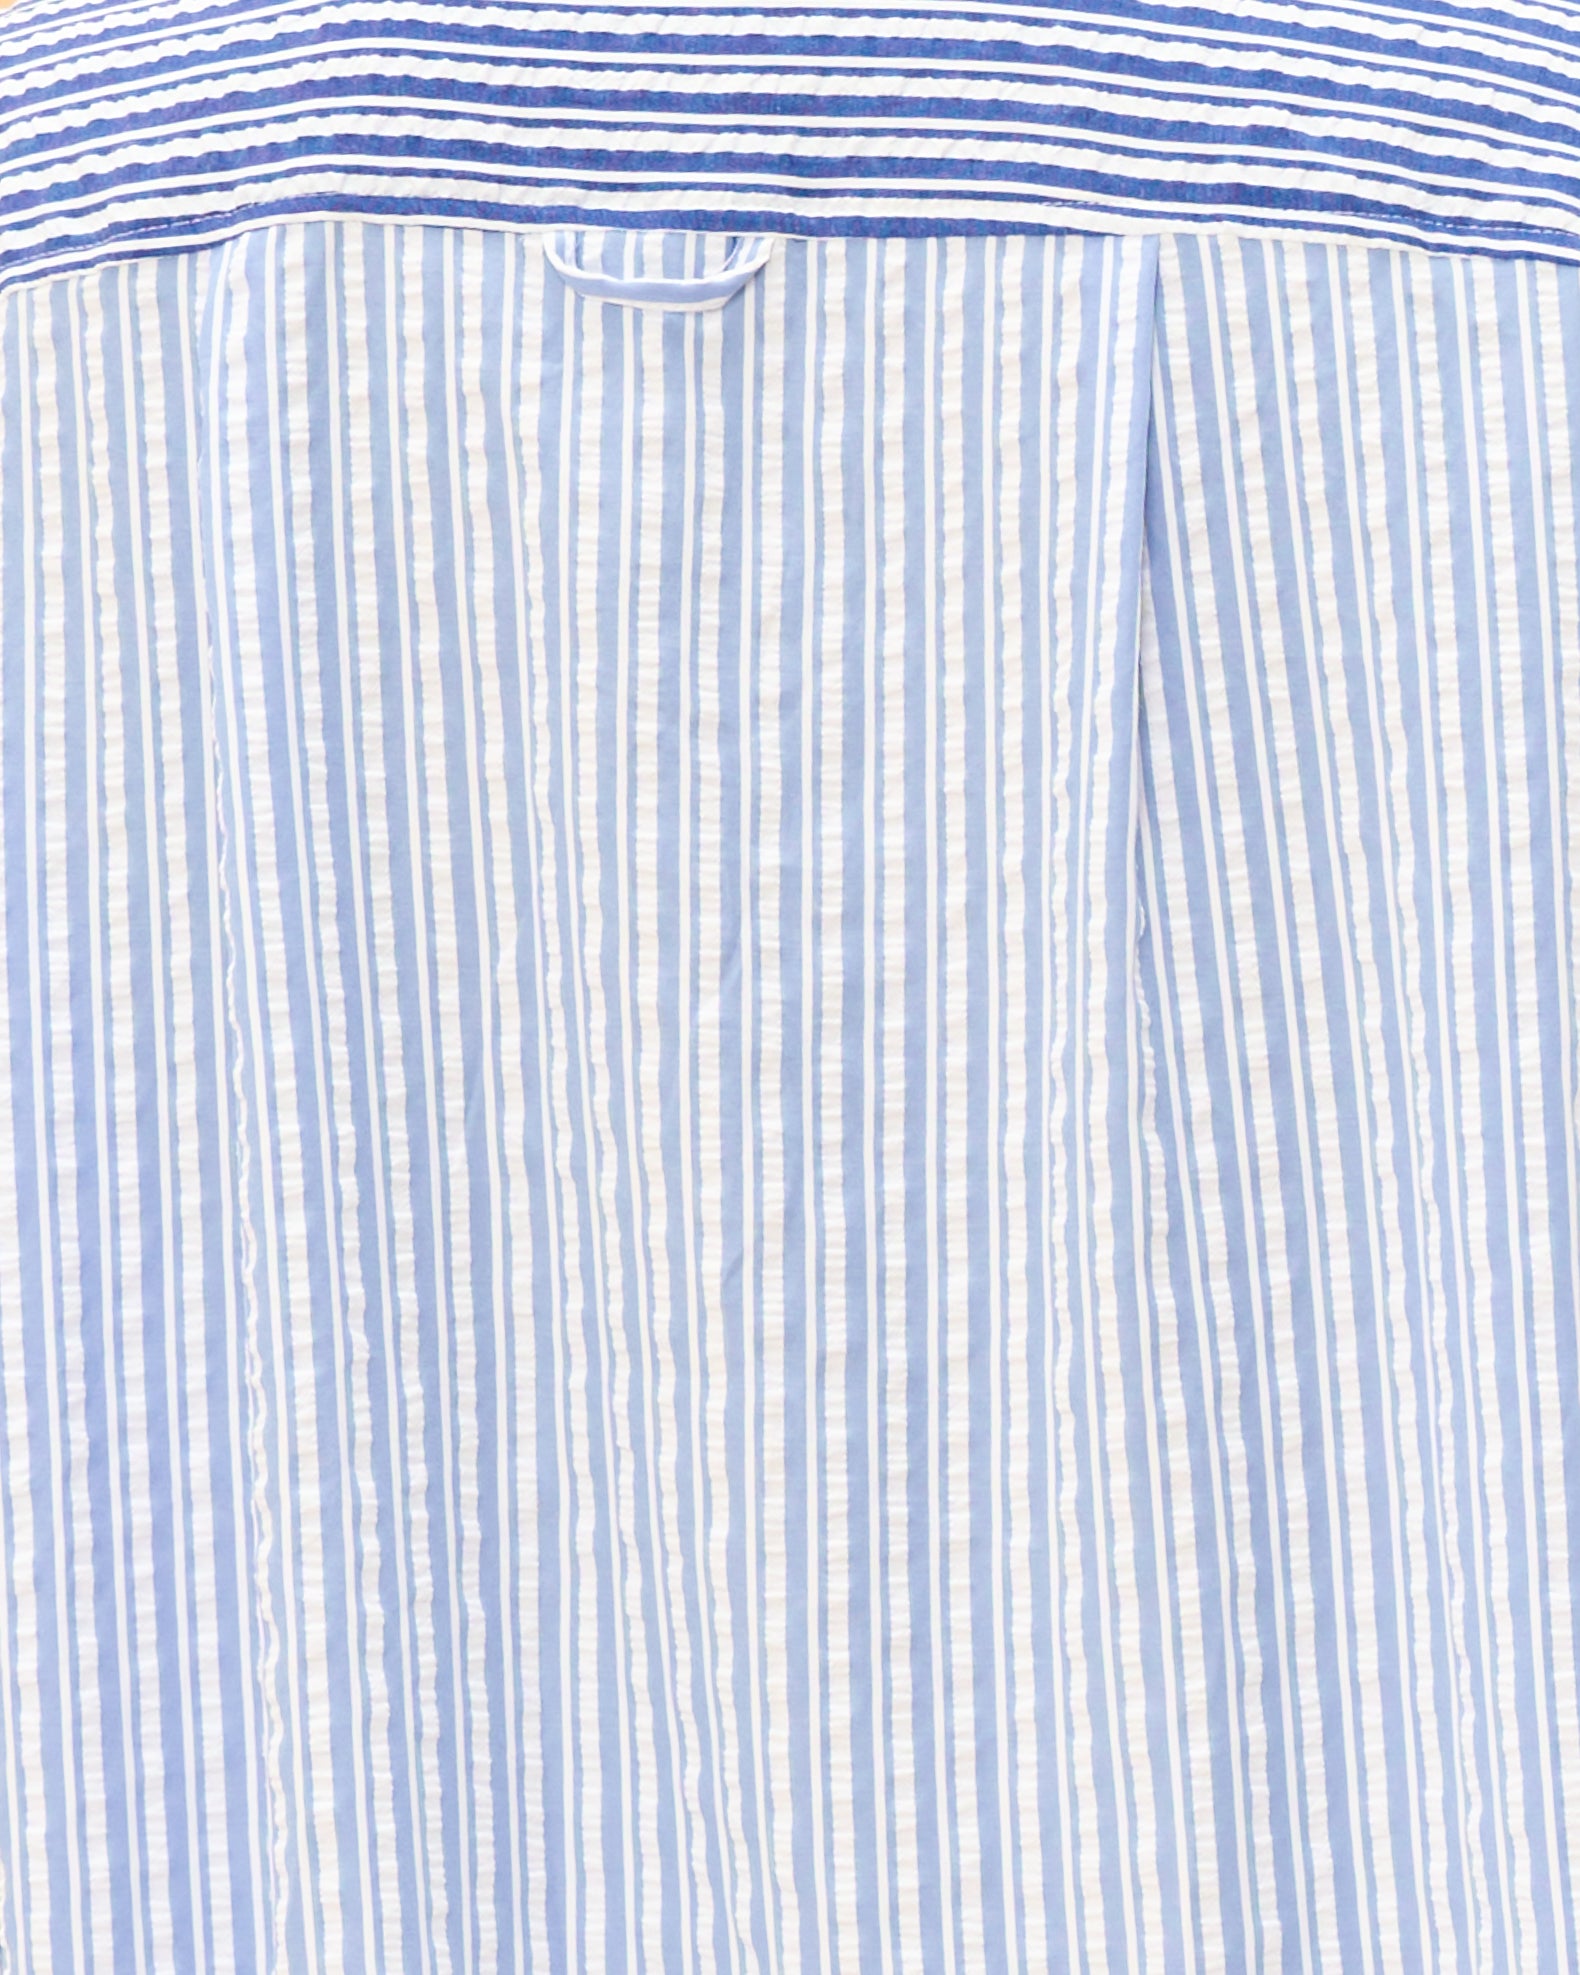 Tia Blue Contrast Stripe Oversized Shirt